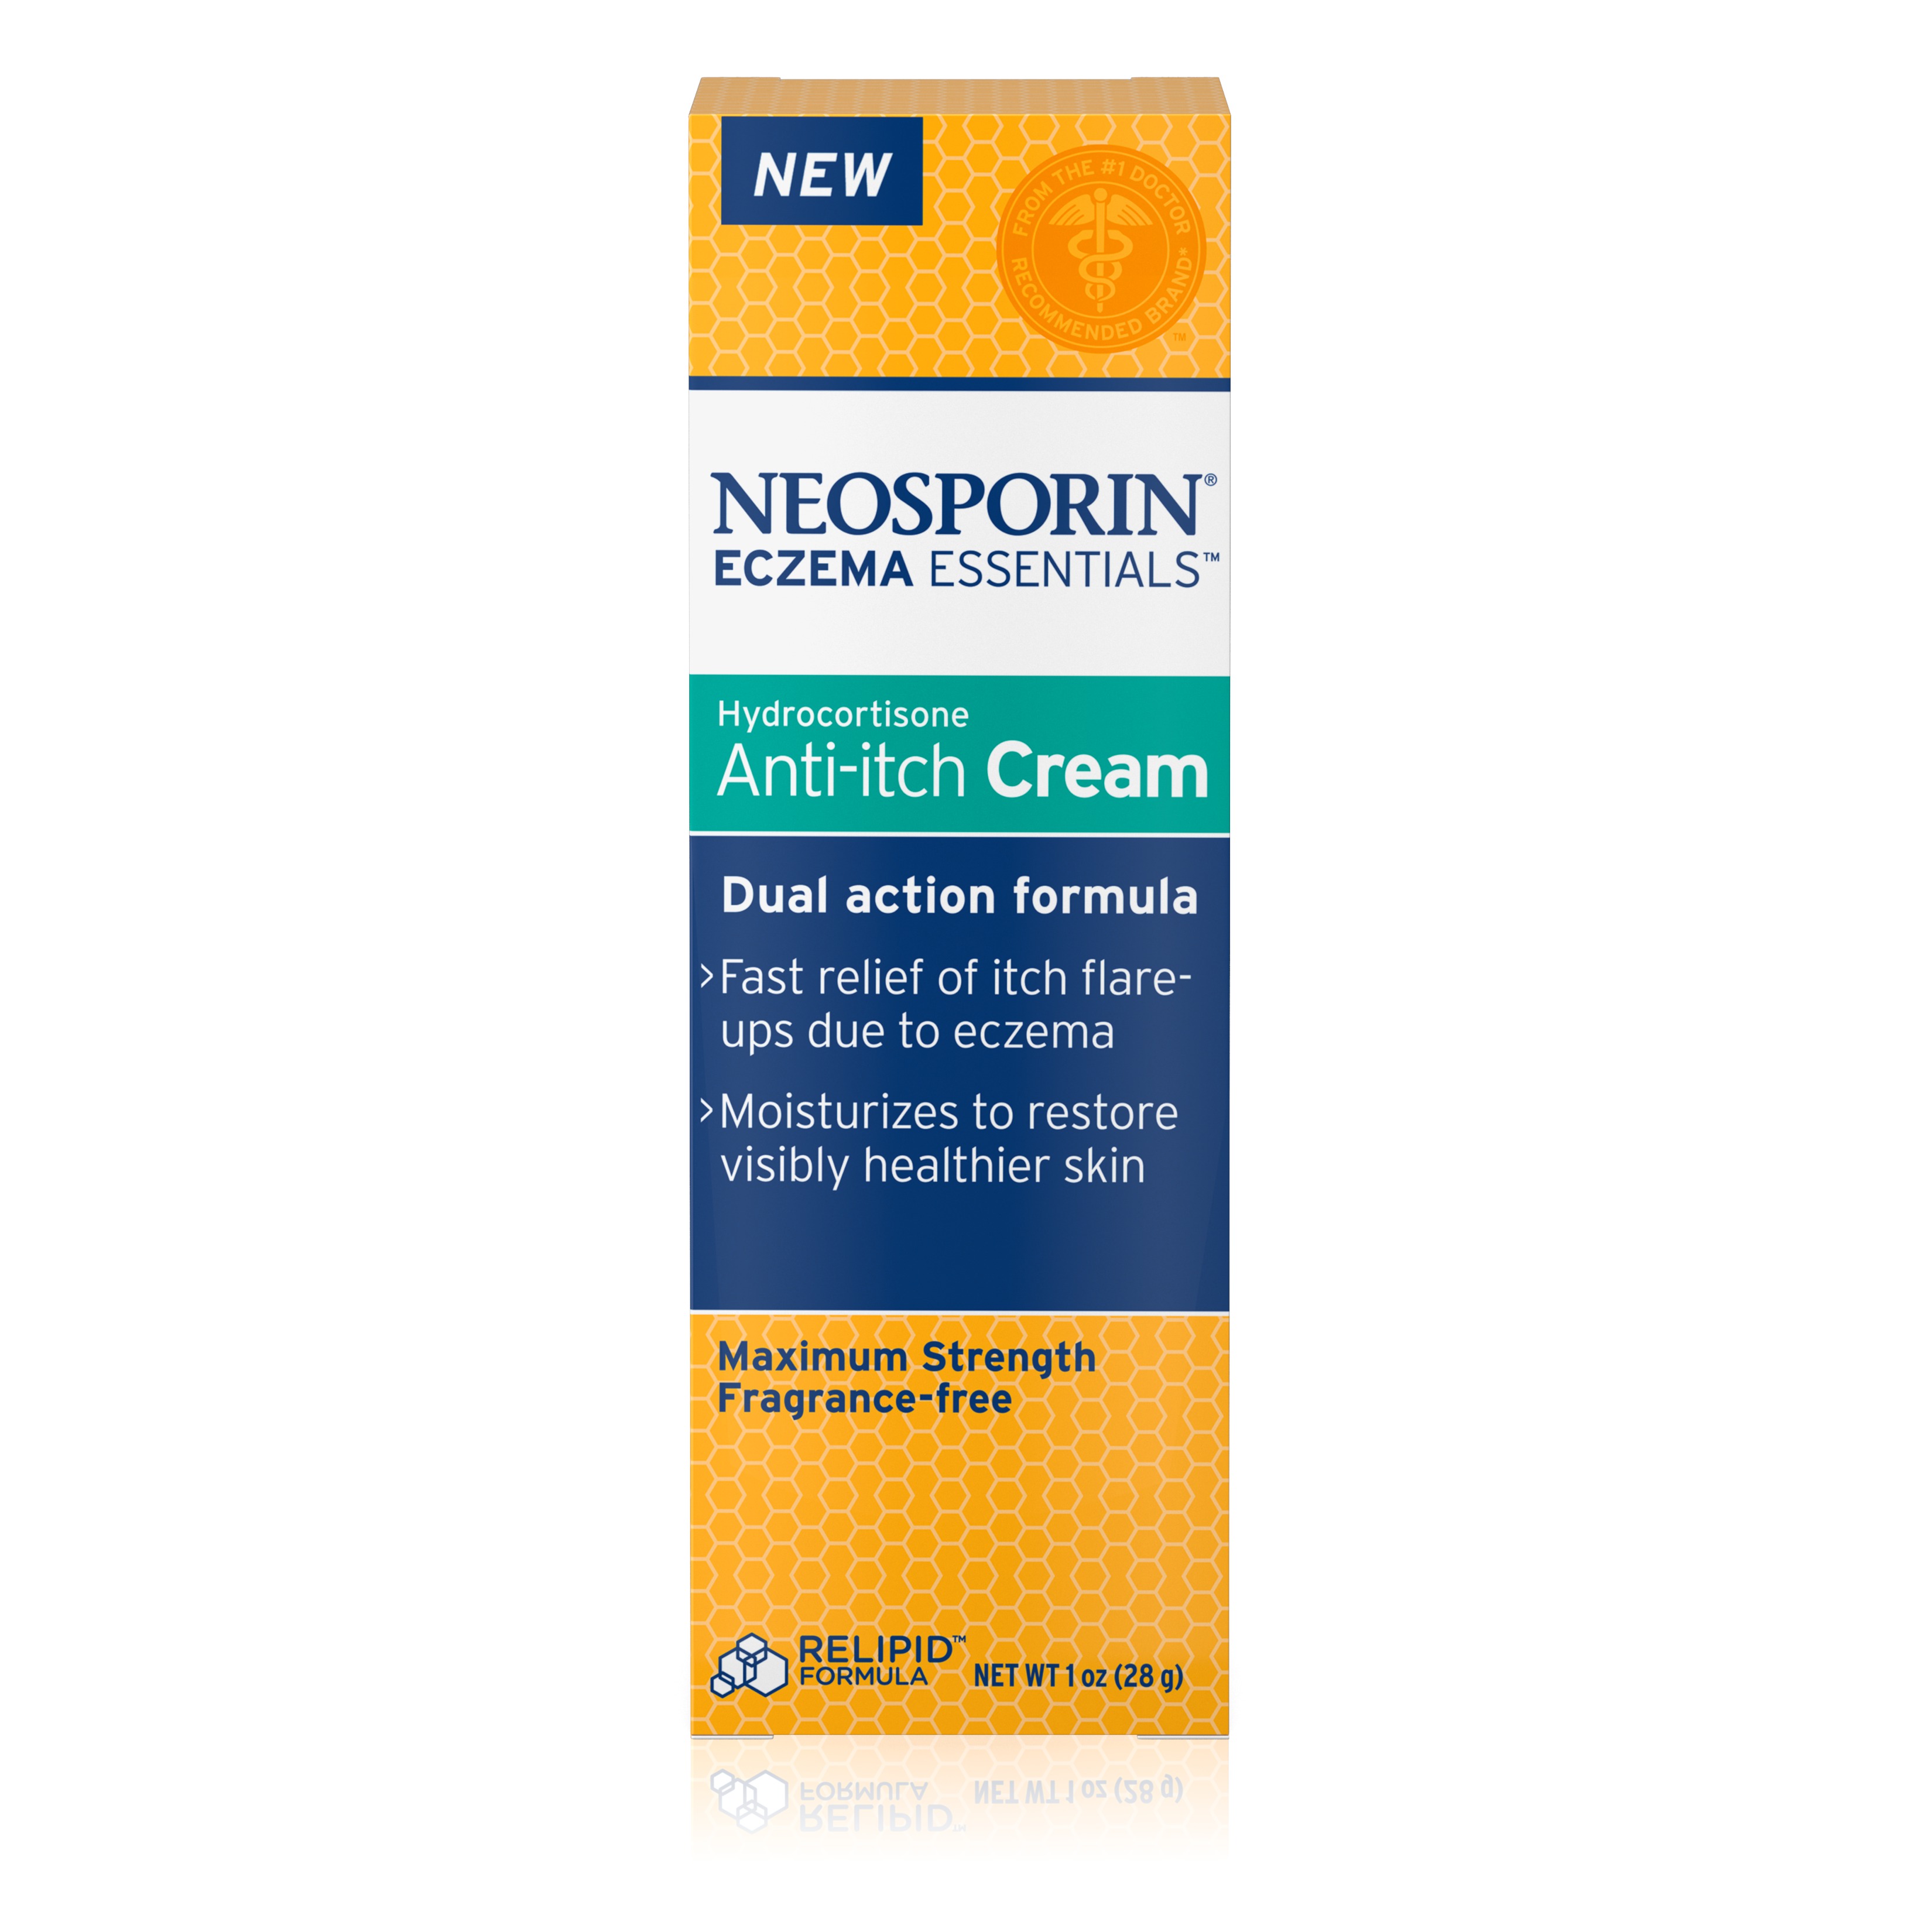 Neosporin Eczema Essentials Hydrocortisone Anti-Itch Cream, 1 Oz - image 1 of 6